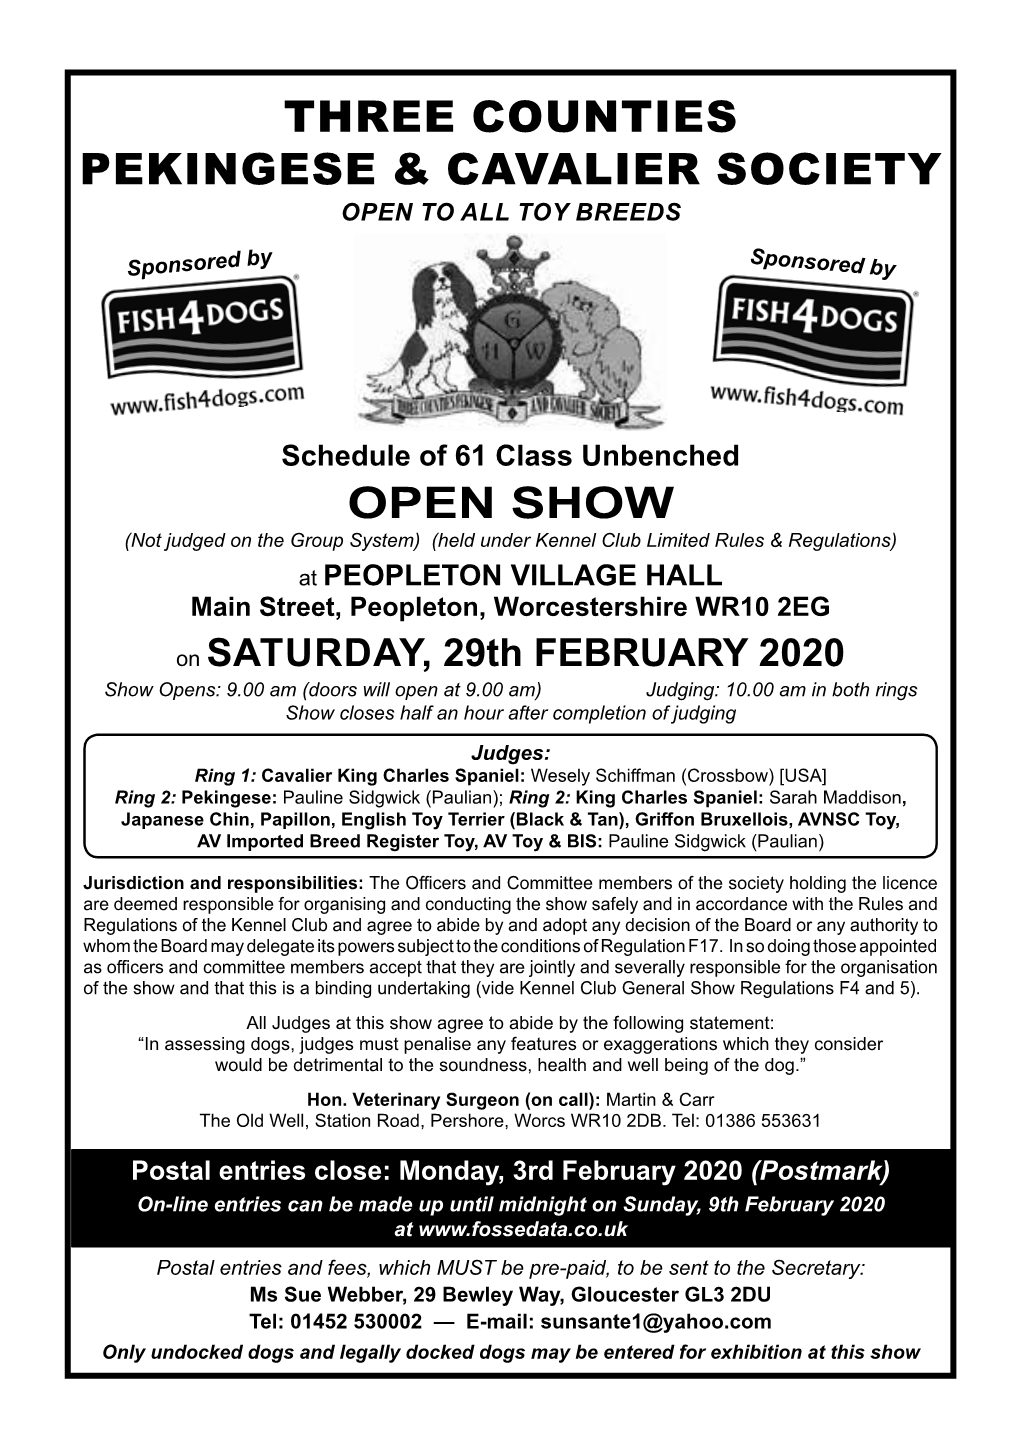 Three Counties Pekingese & Cavalier Society Open Show